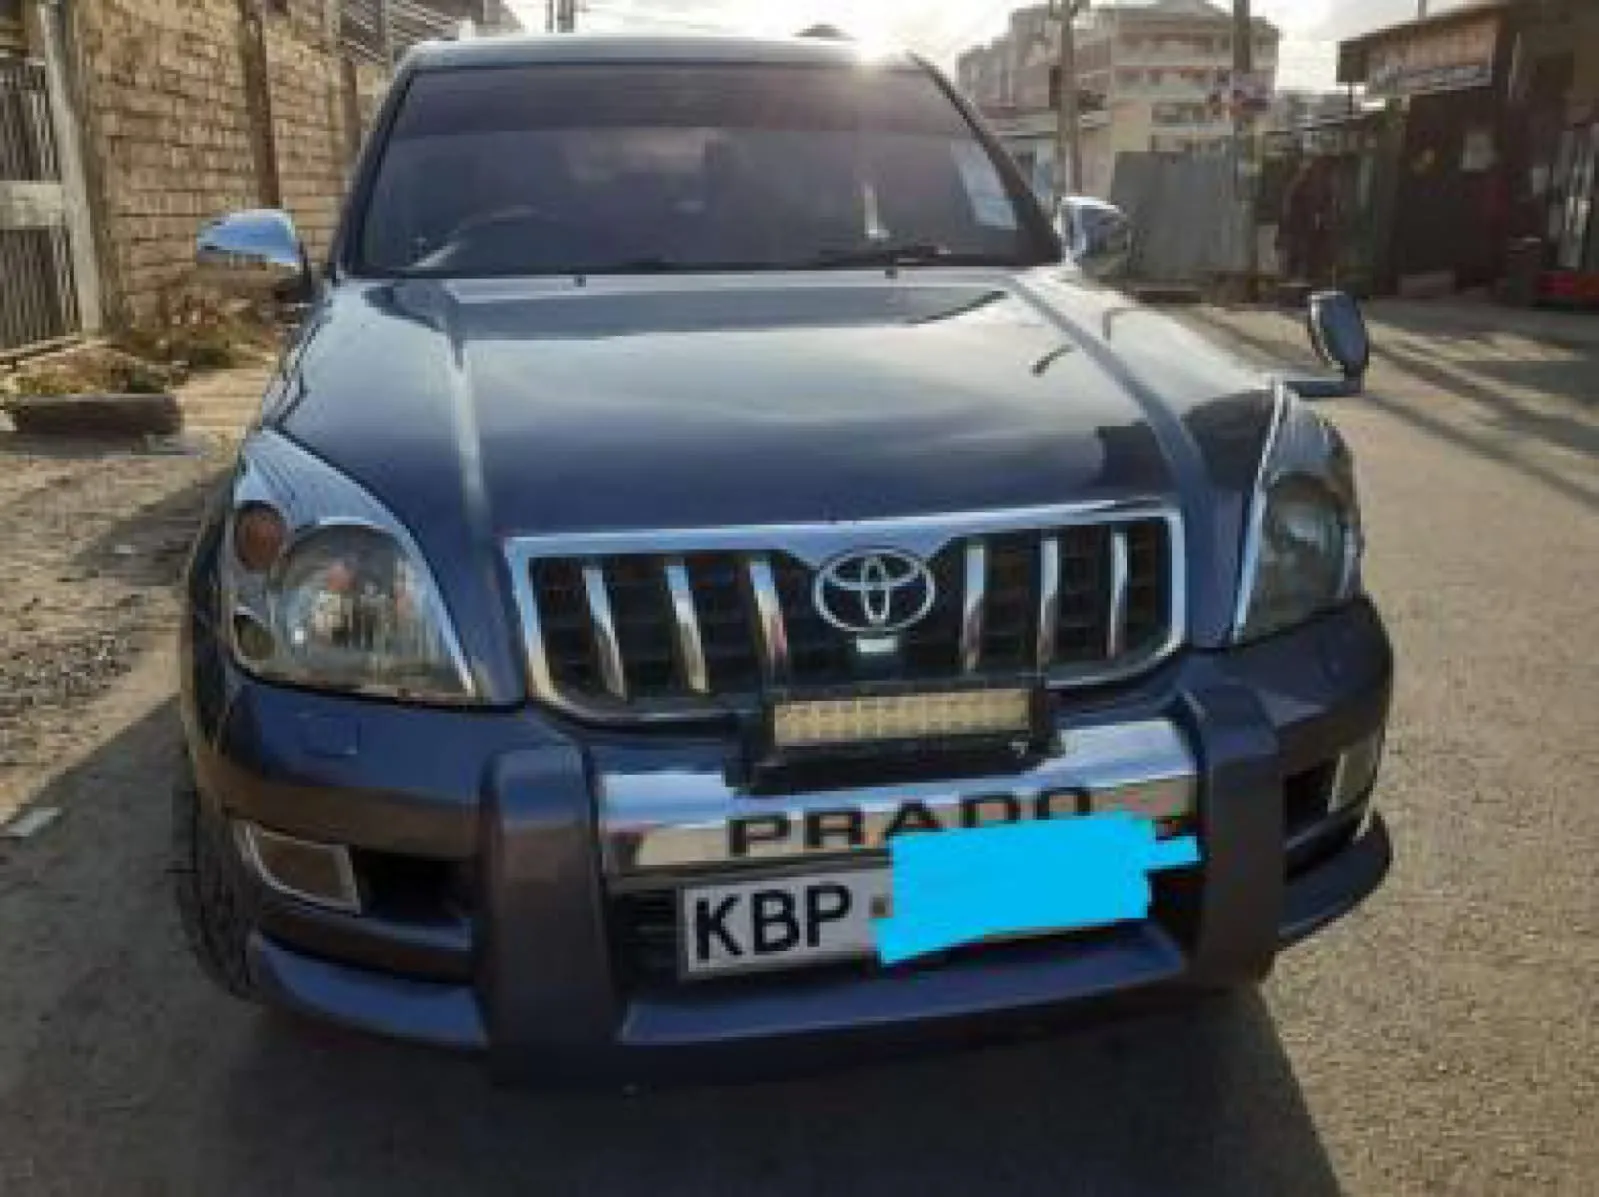 Toyota Prado J120 for sale in kenya DIESEL hire purchase installments 🔥 You Pay 40% Deposit Trade in OK EXCLUSIVE Prado j120